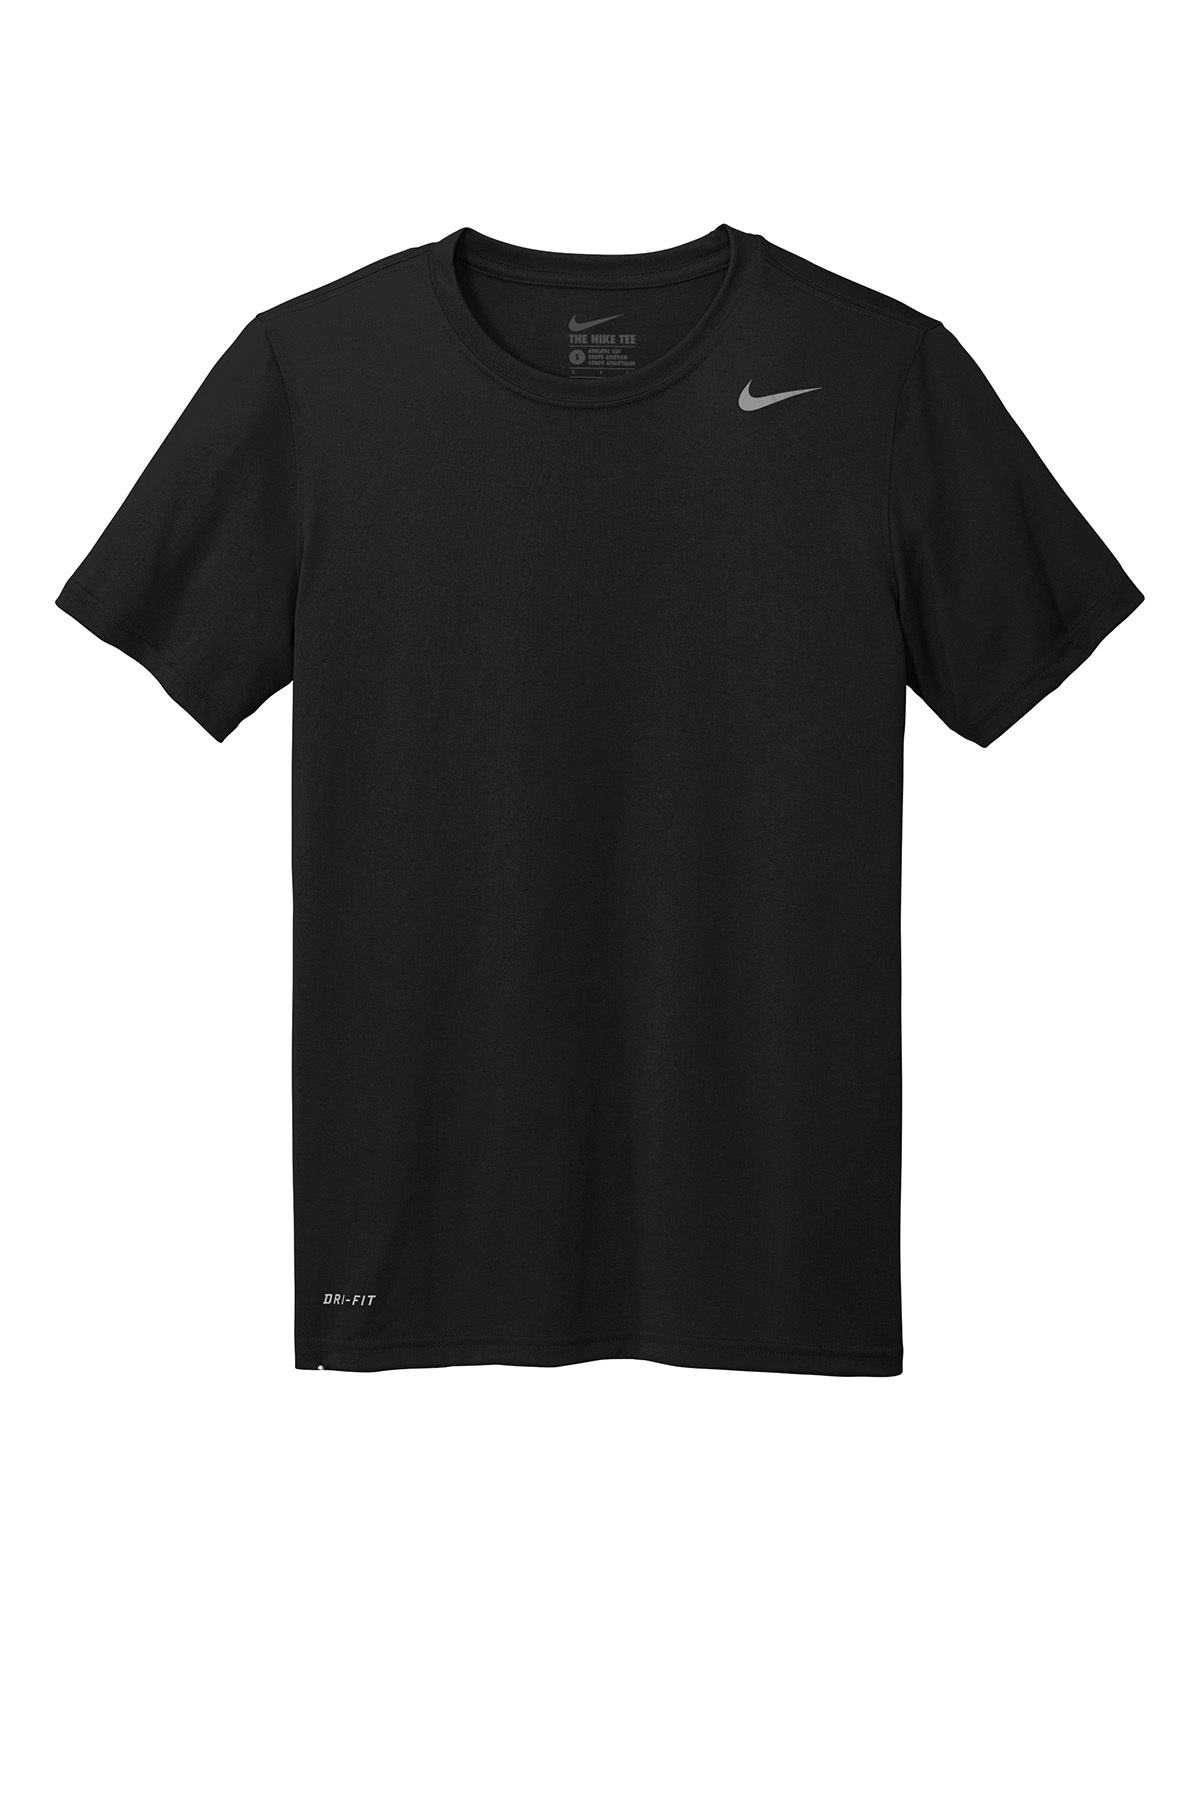 Nike Legend Tee | Product | SanMar